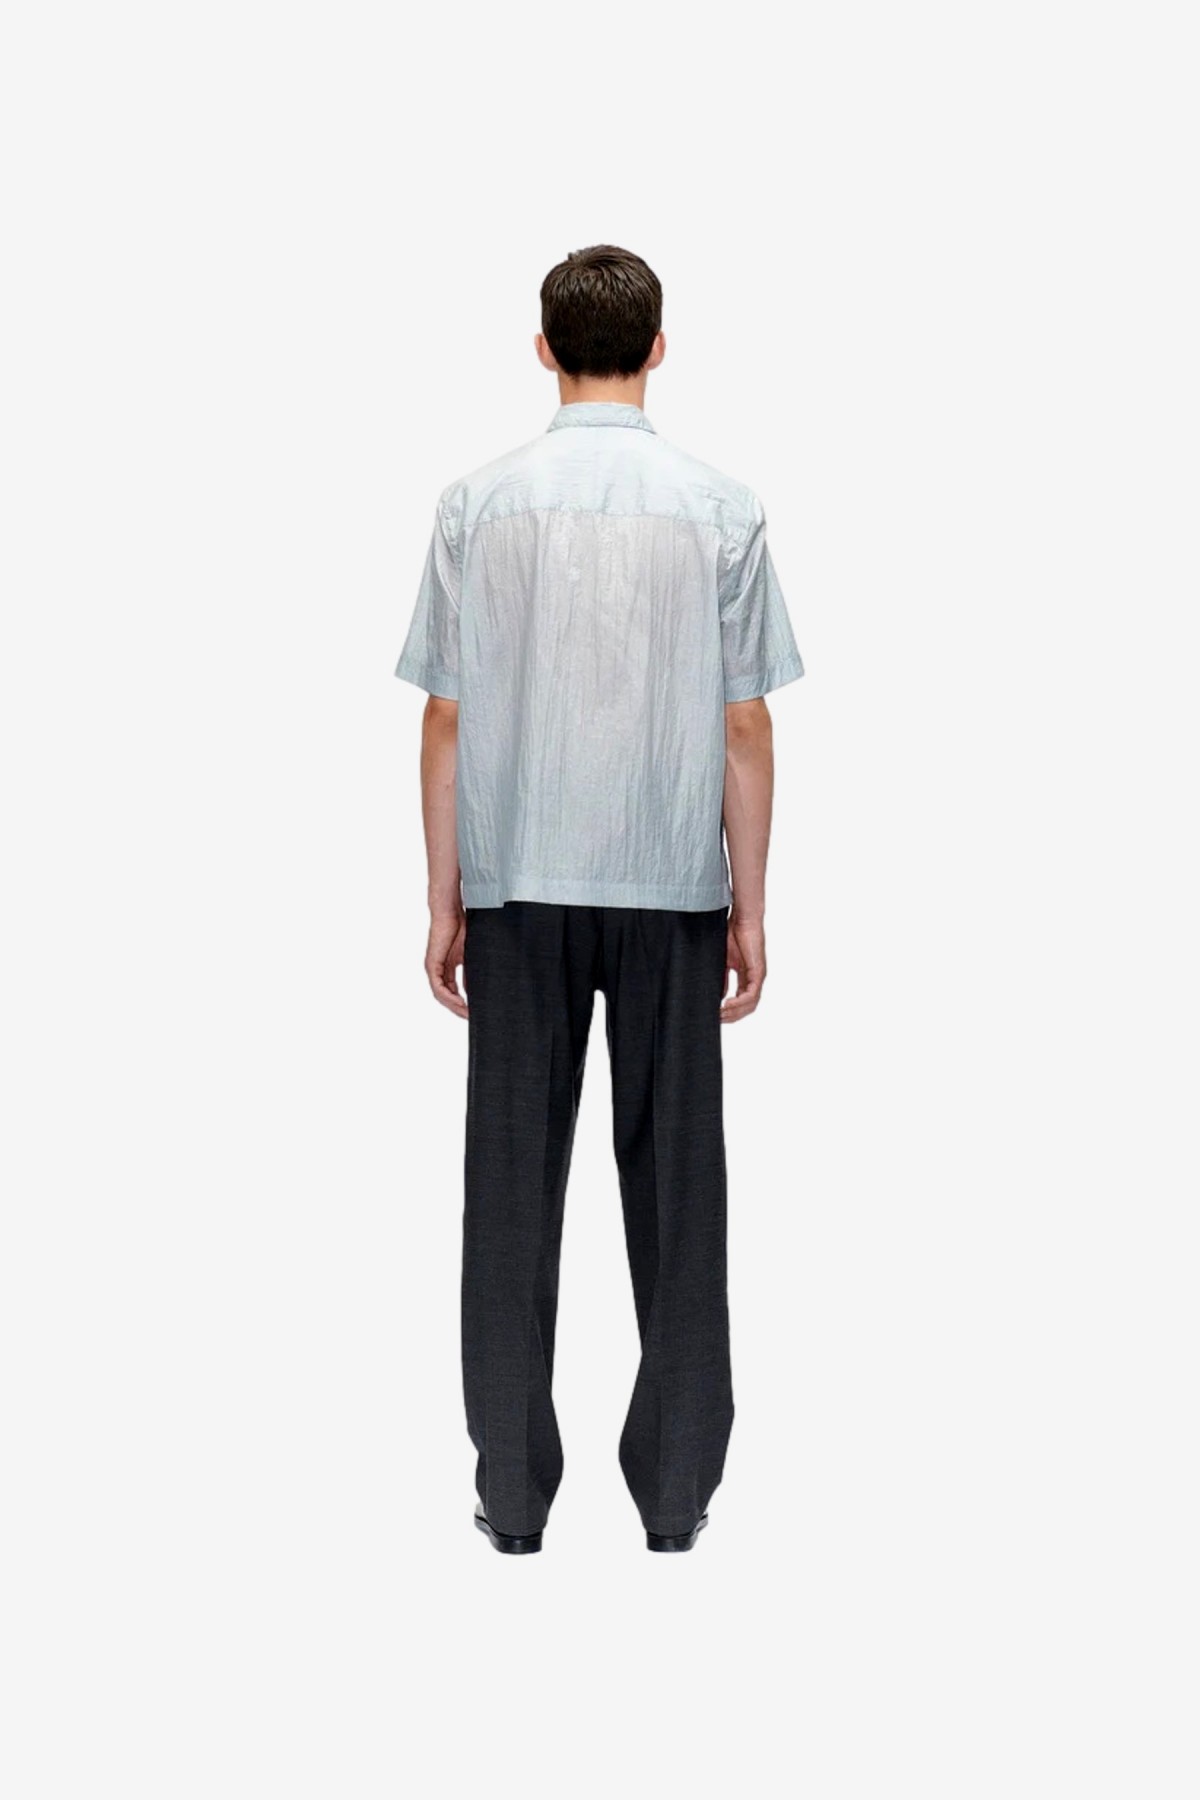 Berner Kühl Wander Shirt Microtril in 081 Grey